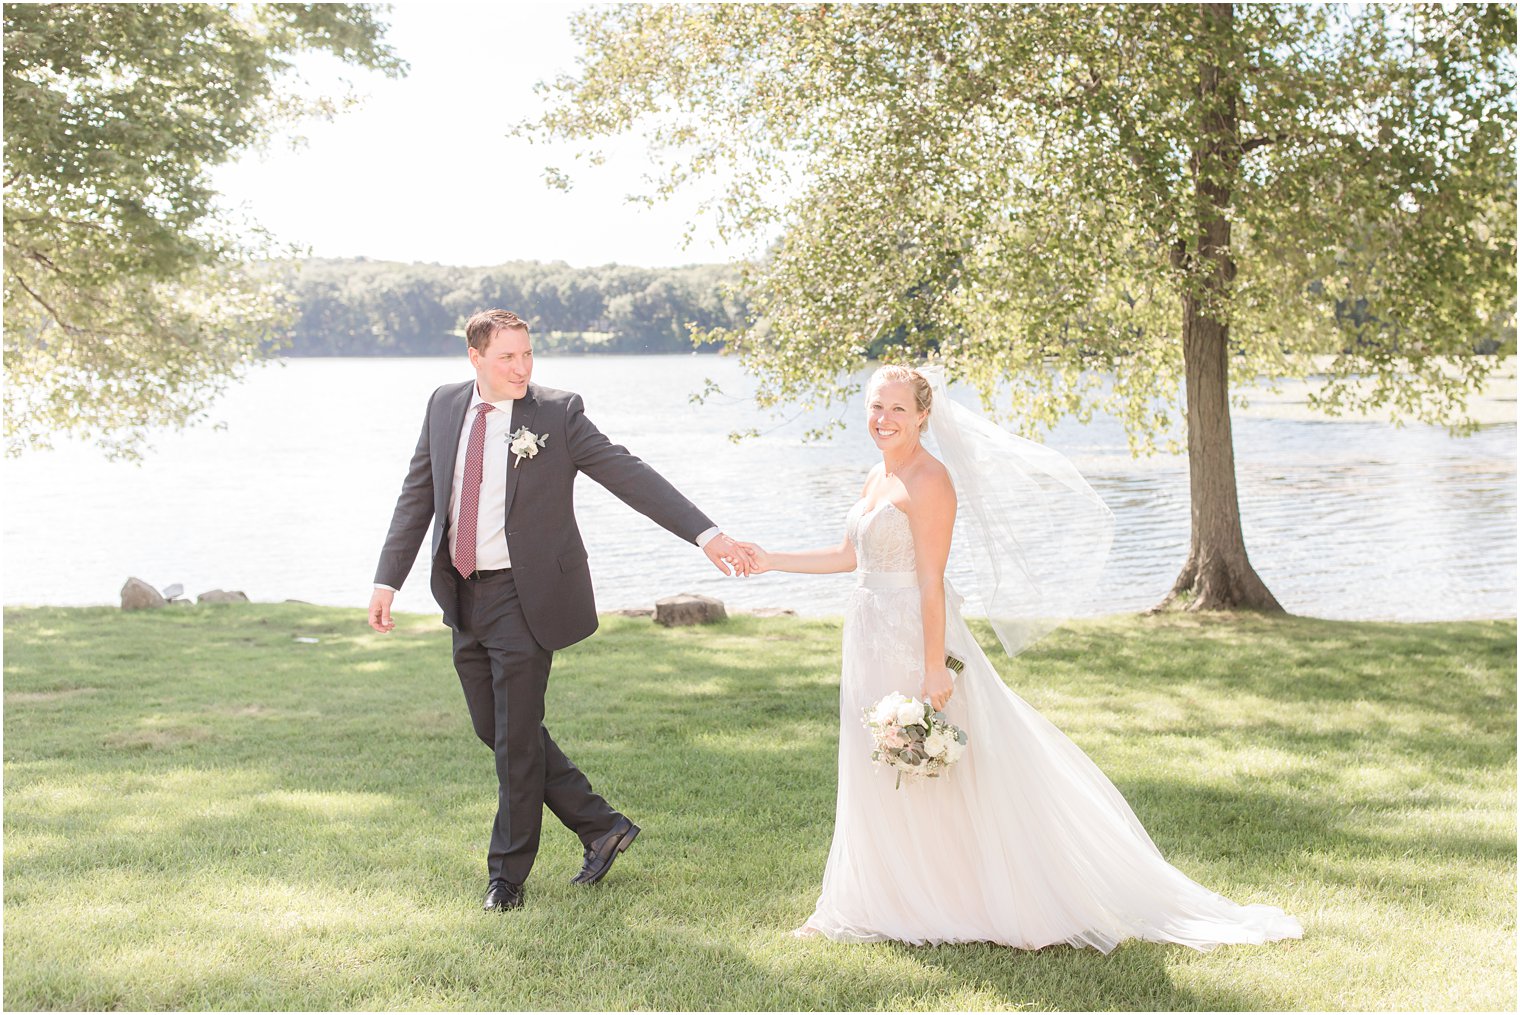 Franklin Lakes NJ wedding portraits by the lake